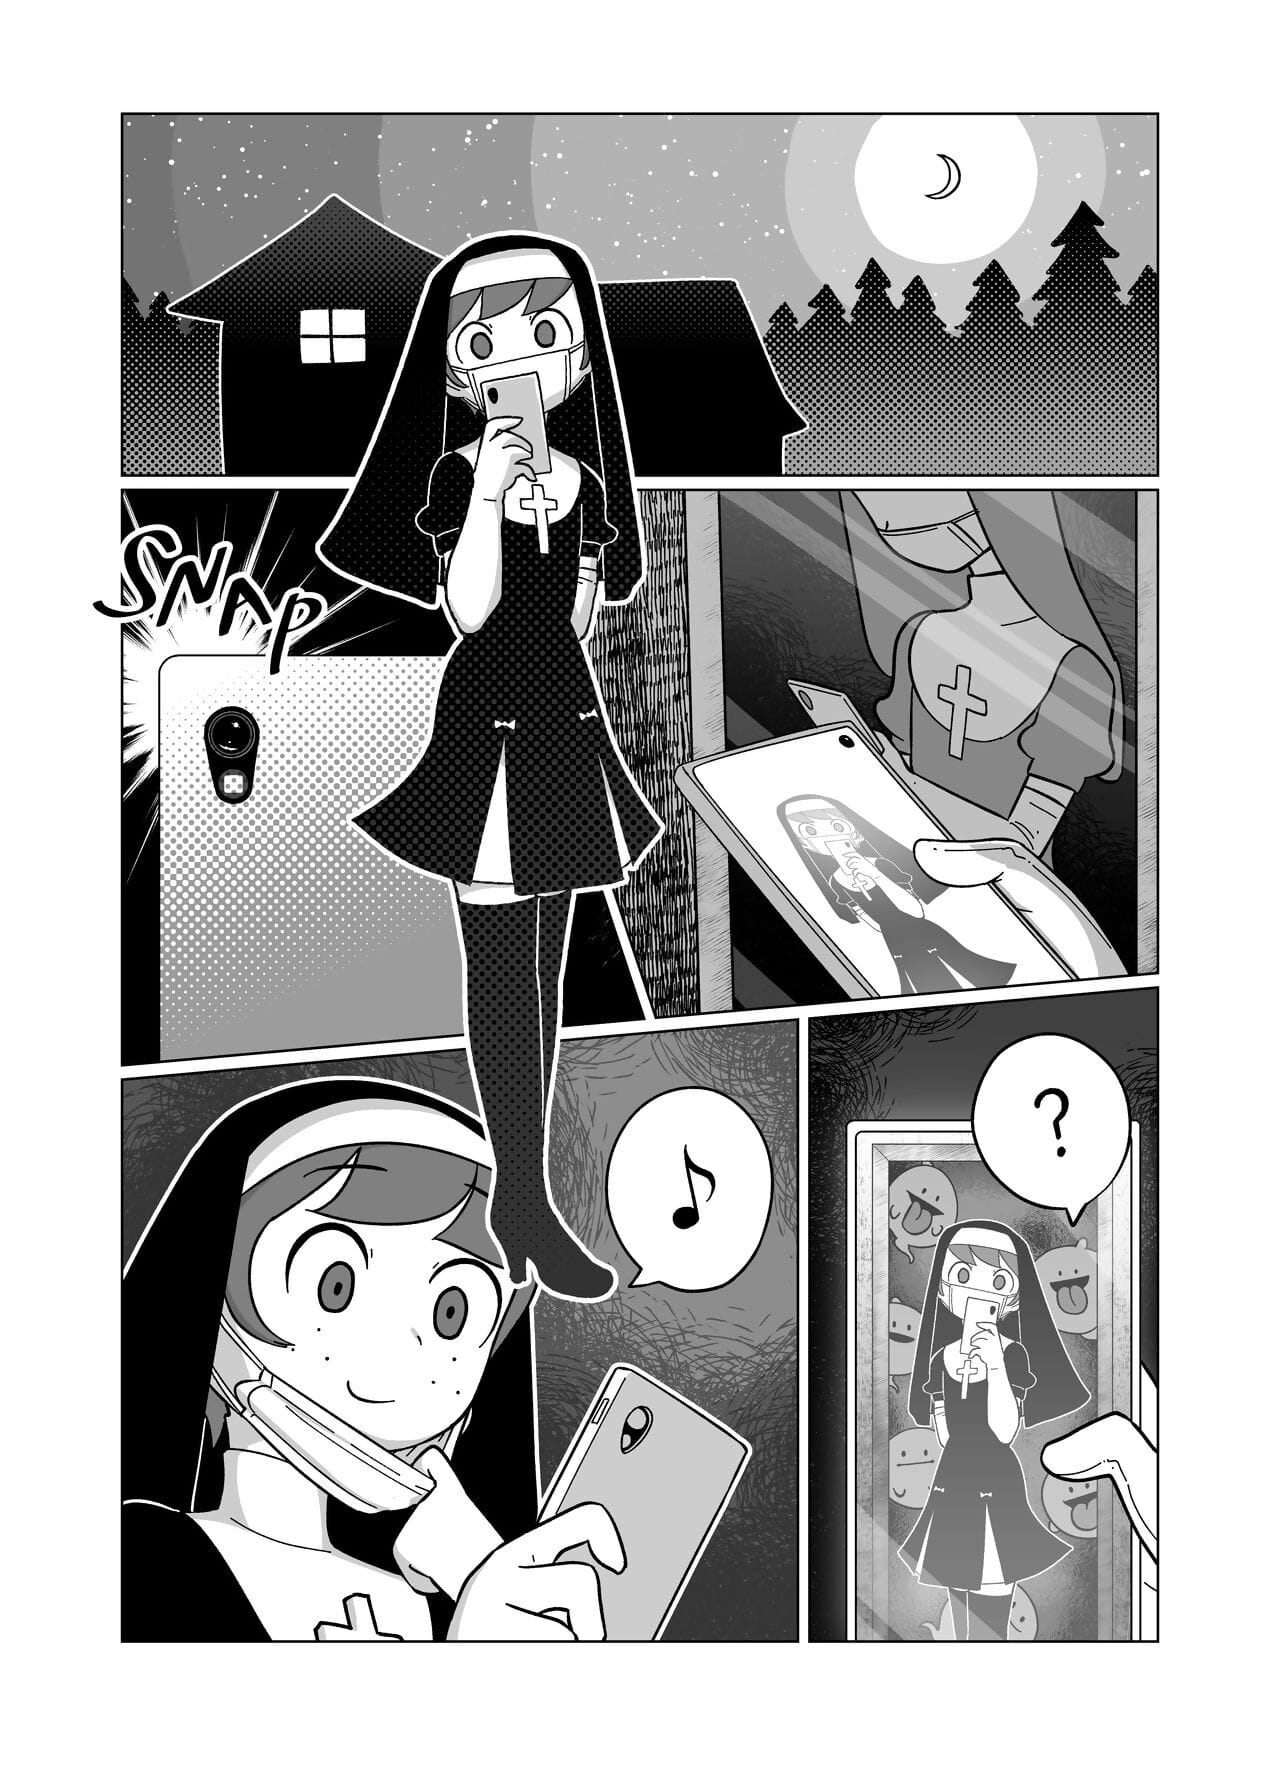 Marina e cupo combo :Fumetto: page 1